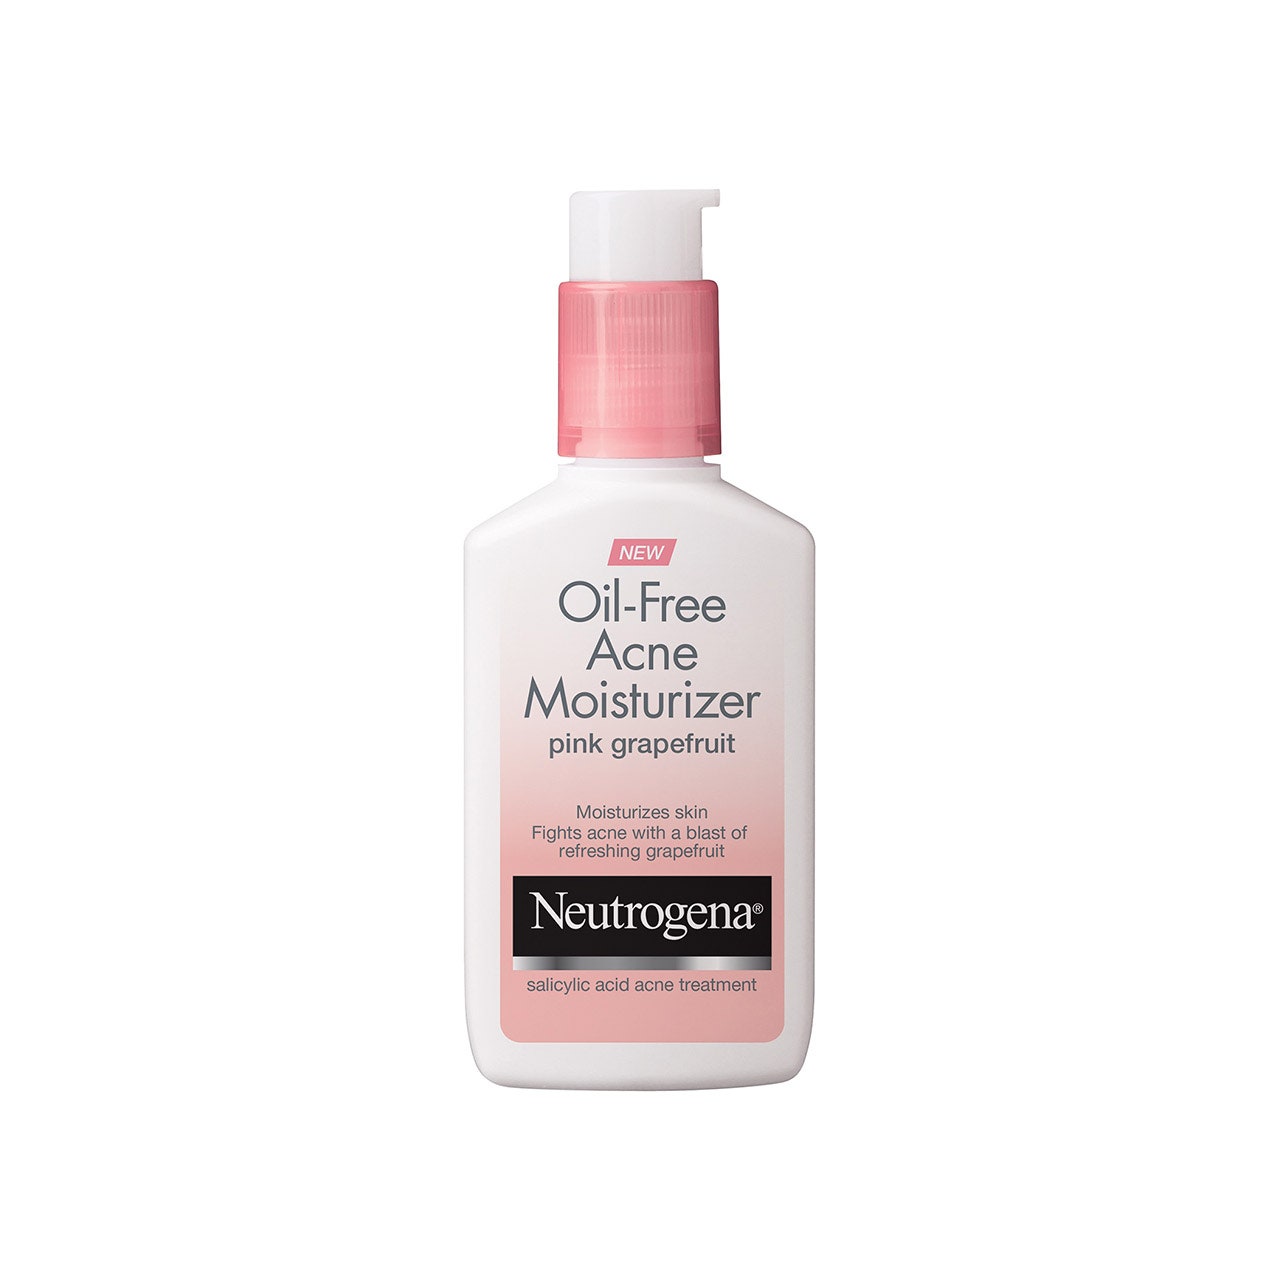 neutrogena pink grapefruit oil free moisturiser review